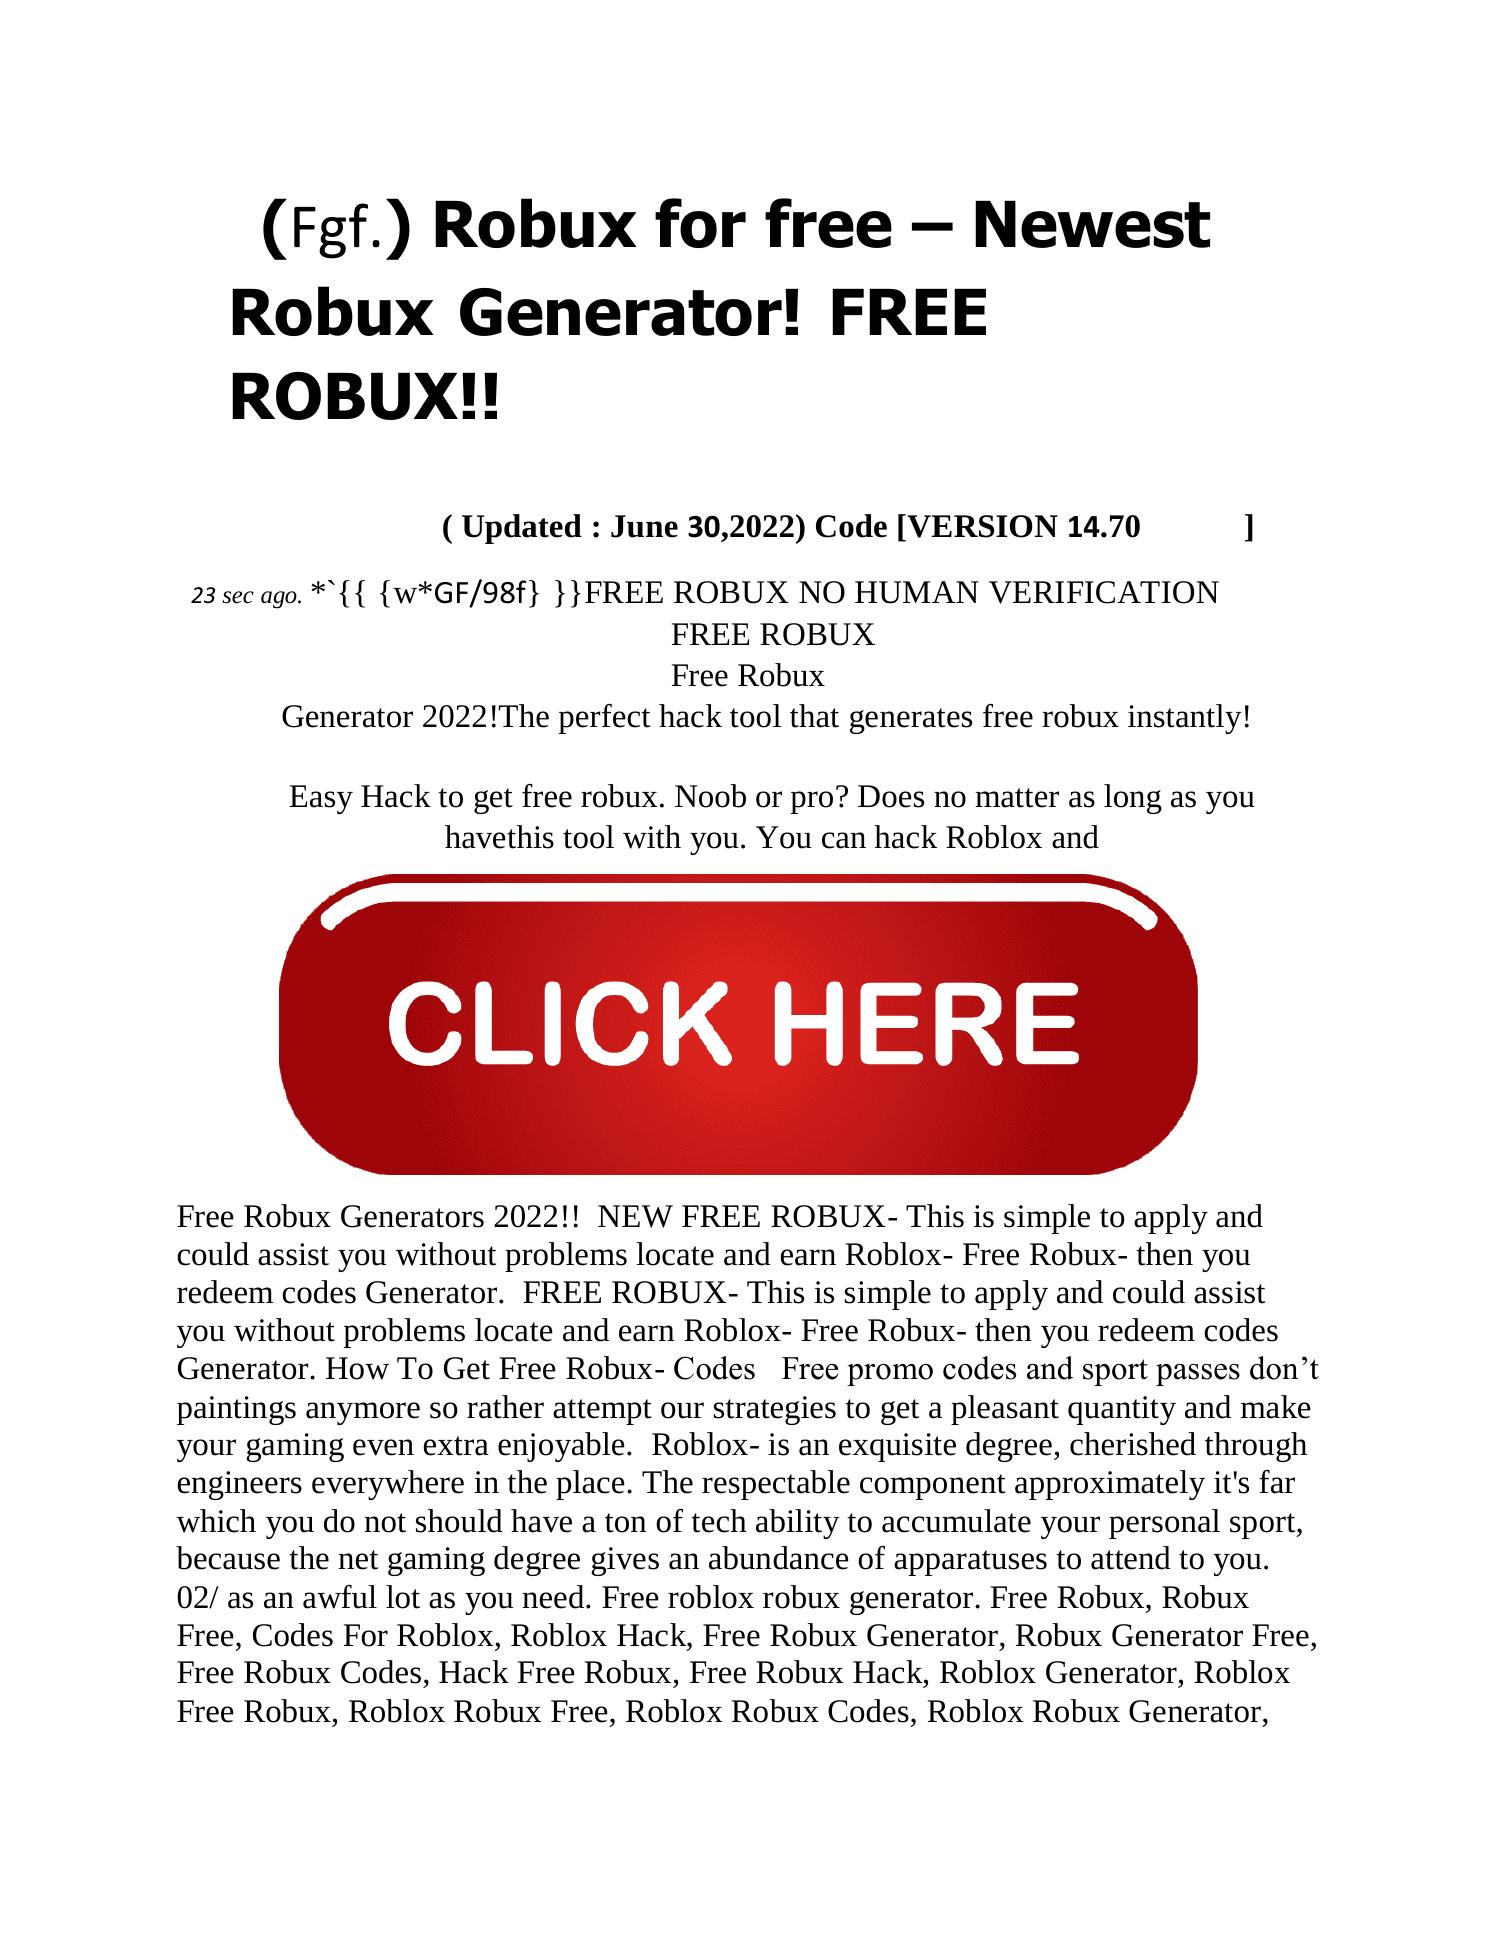 free robux generator no verification.pdf